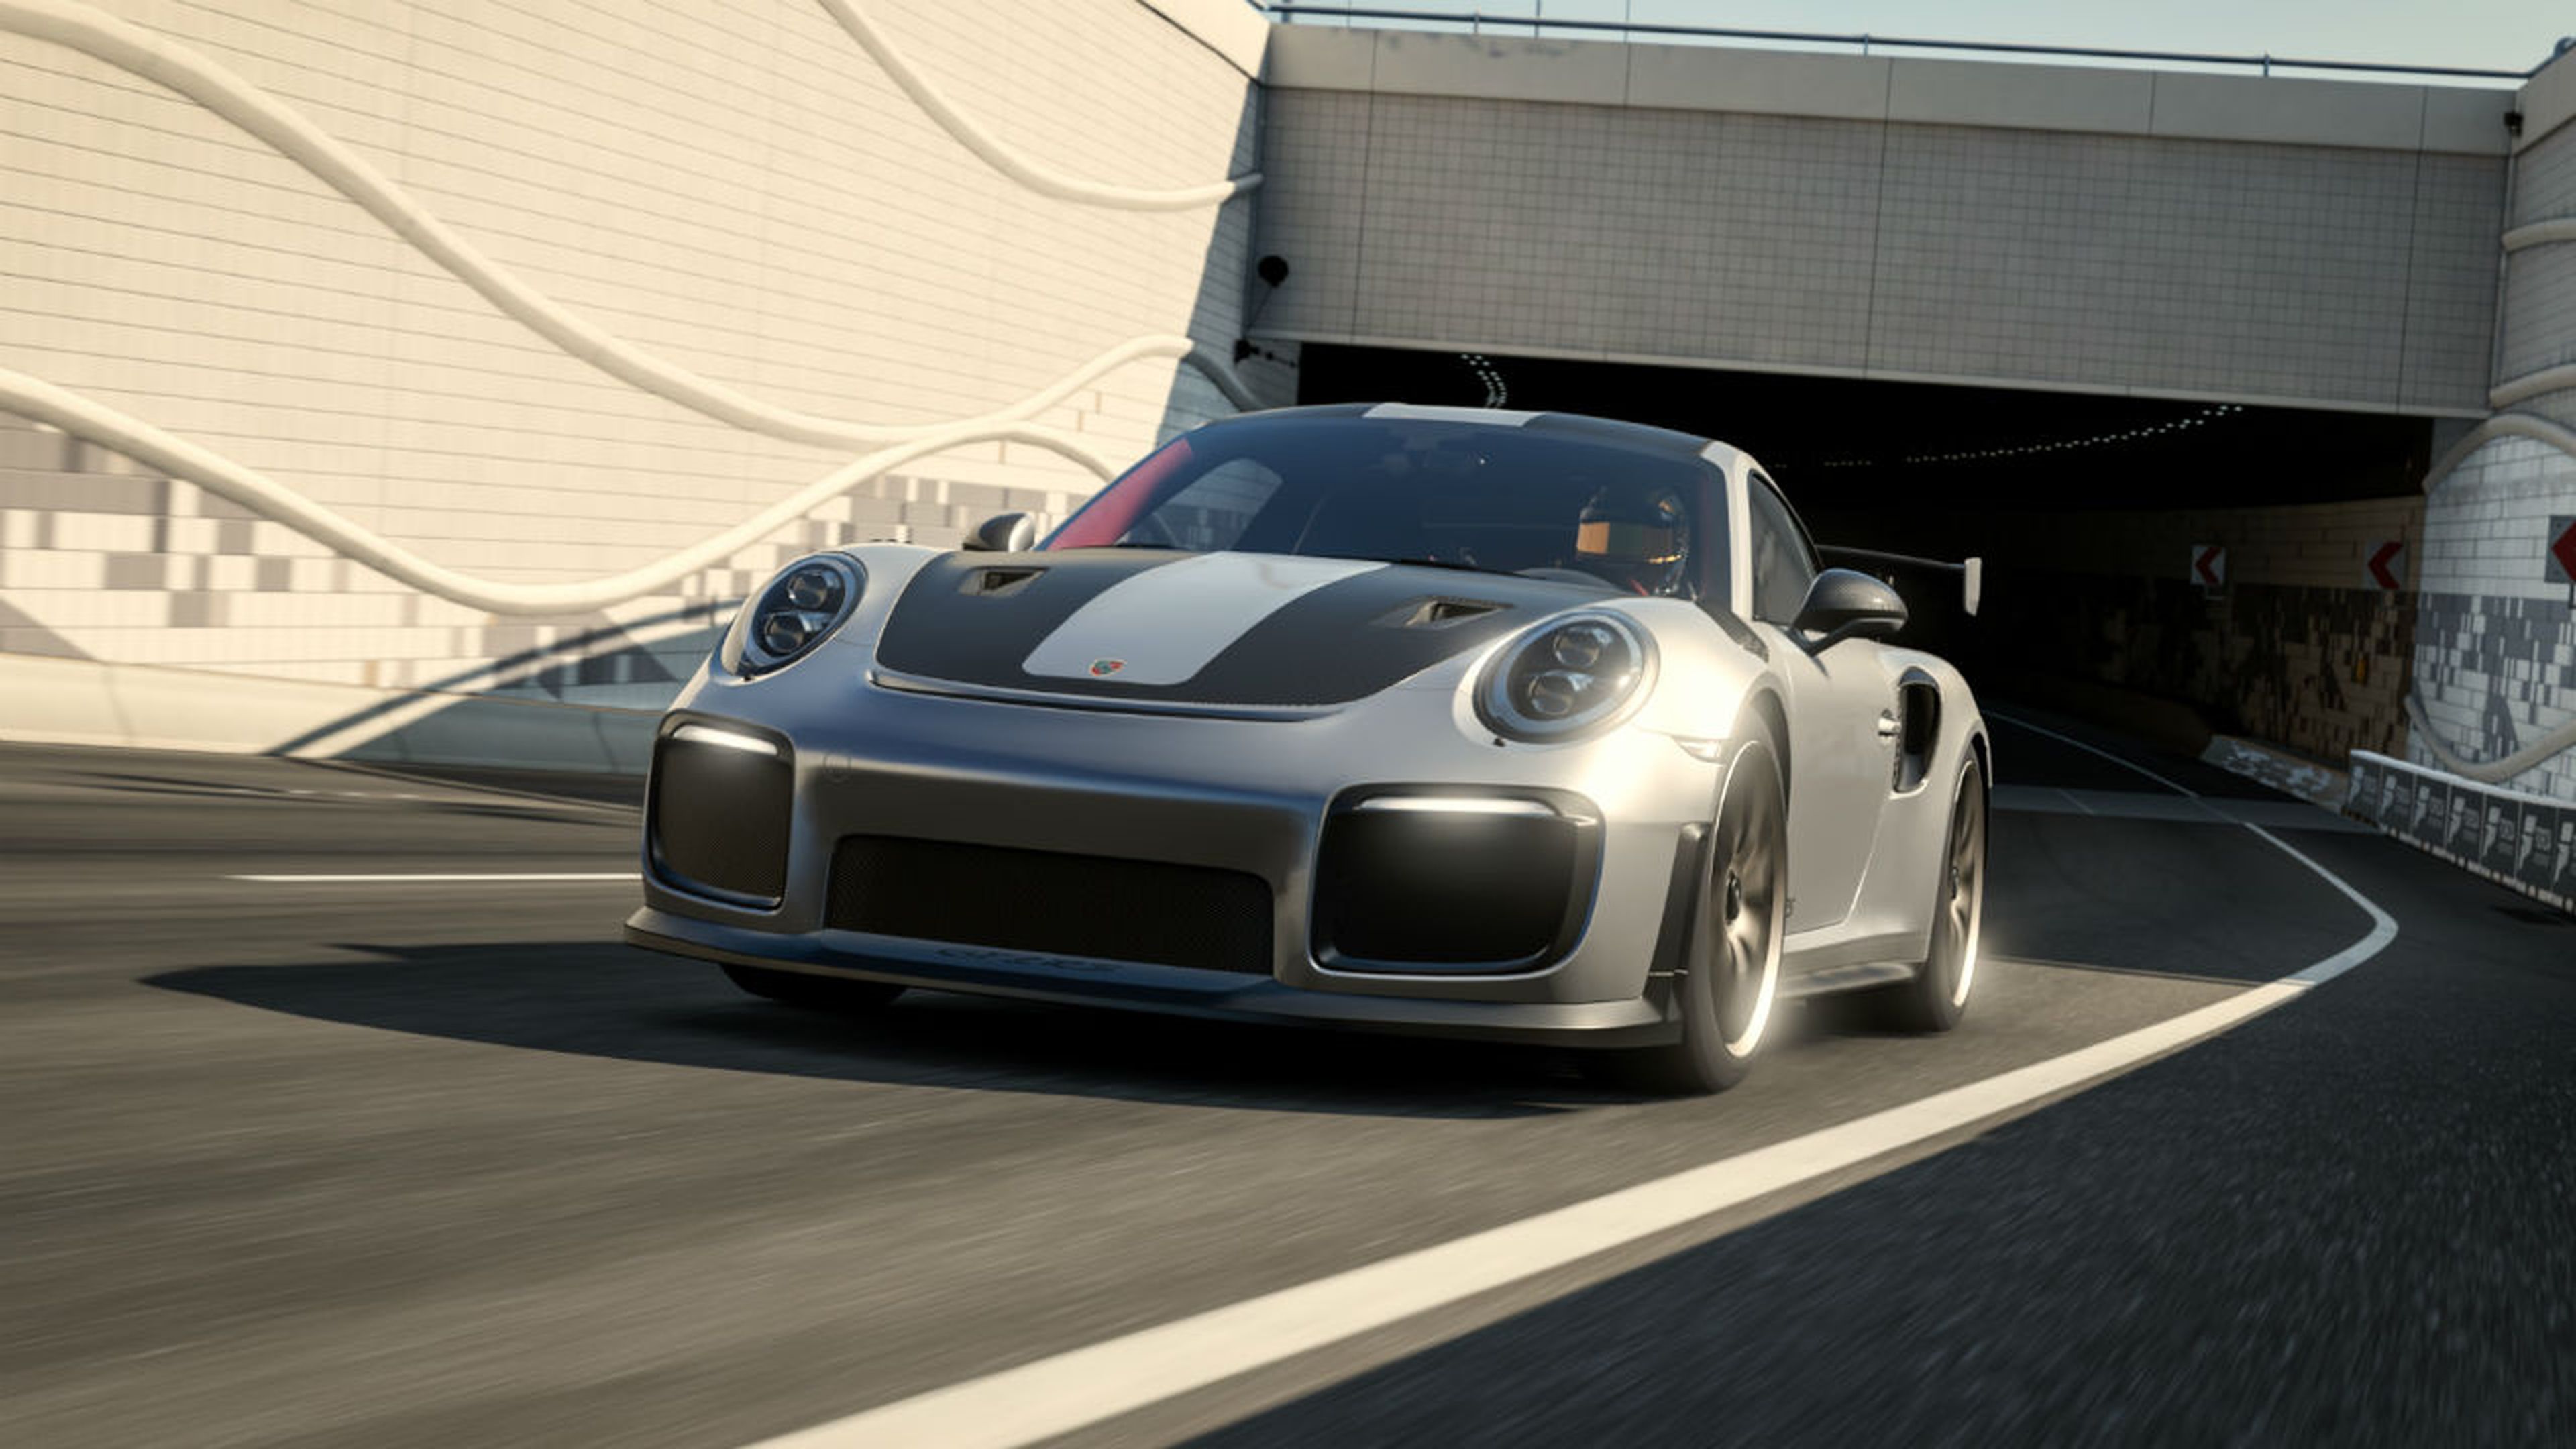 Porsche 911 GT2 RS Forza Motorsport 7